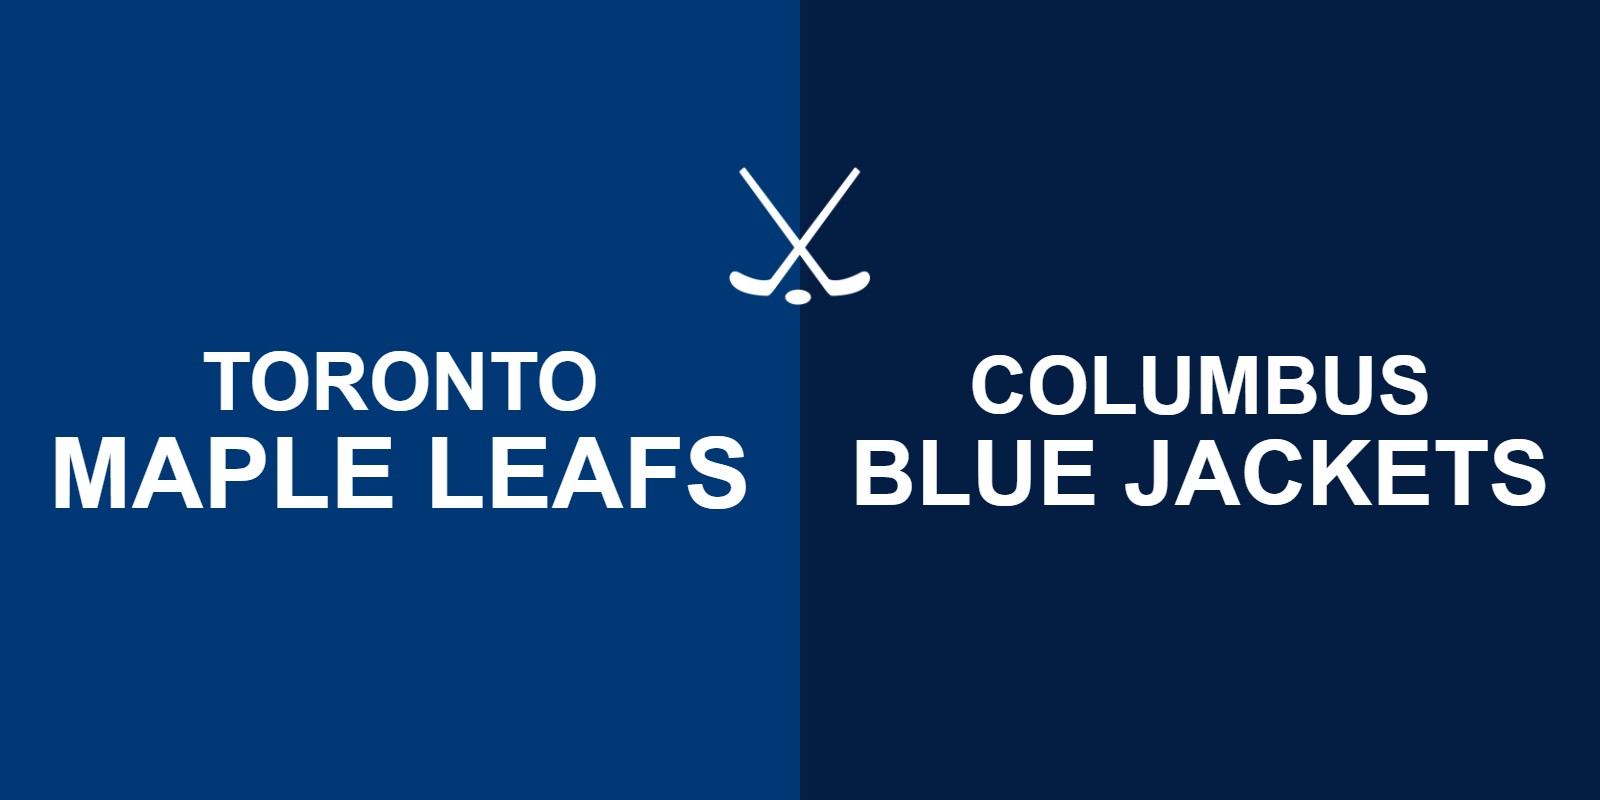 Maple Leafs vs Blue Jackets